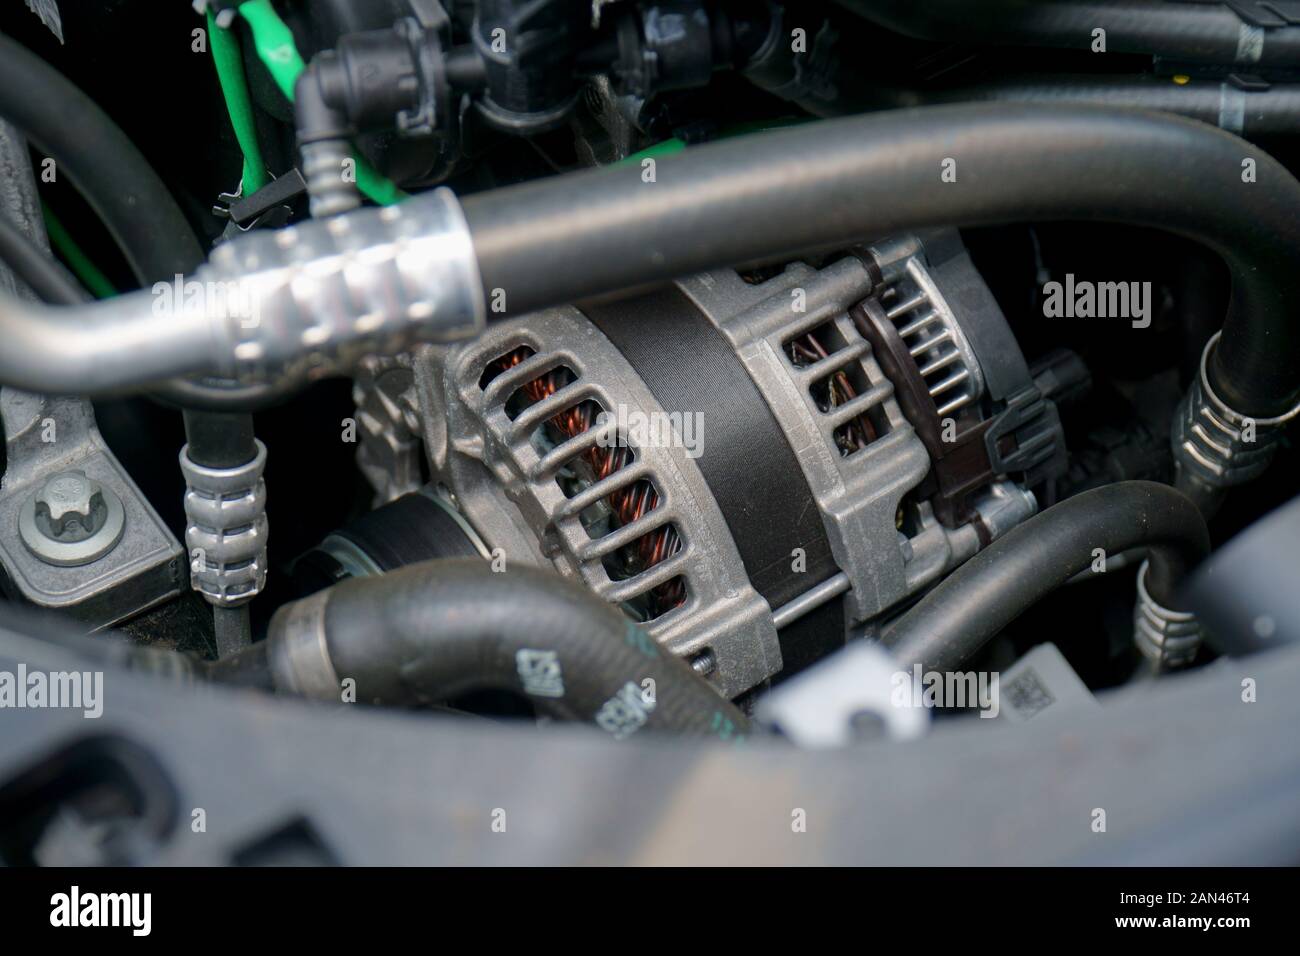 Alternator in engine bay of a car Stock Photo